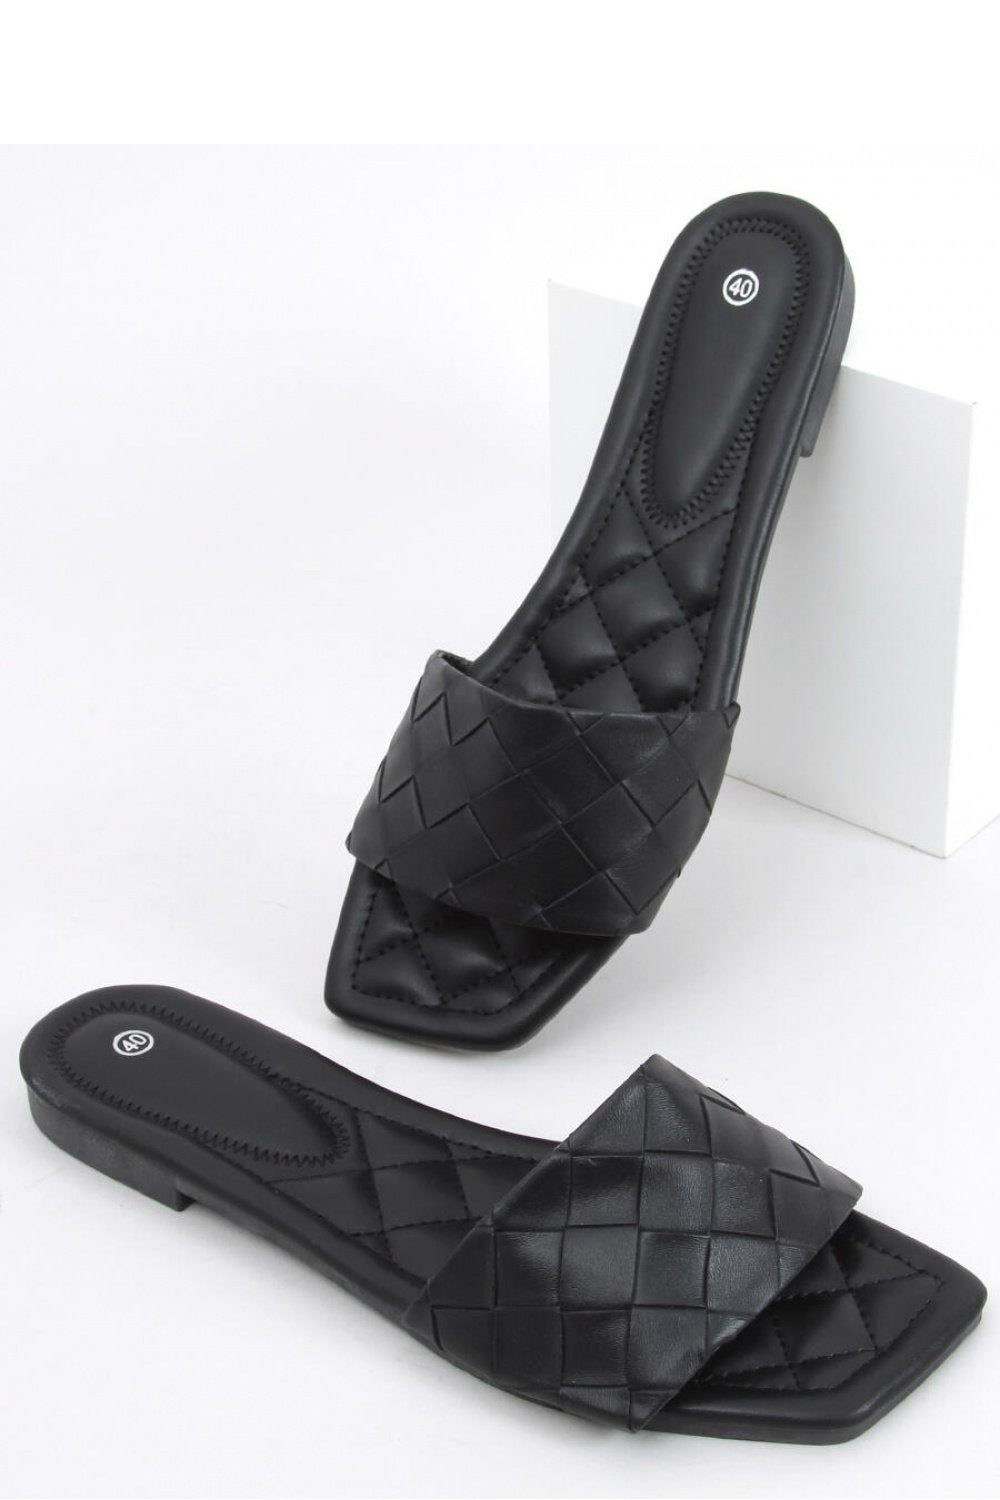 Flip-flops model 164349 Inello Posh Styles Apparel